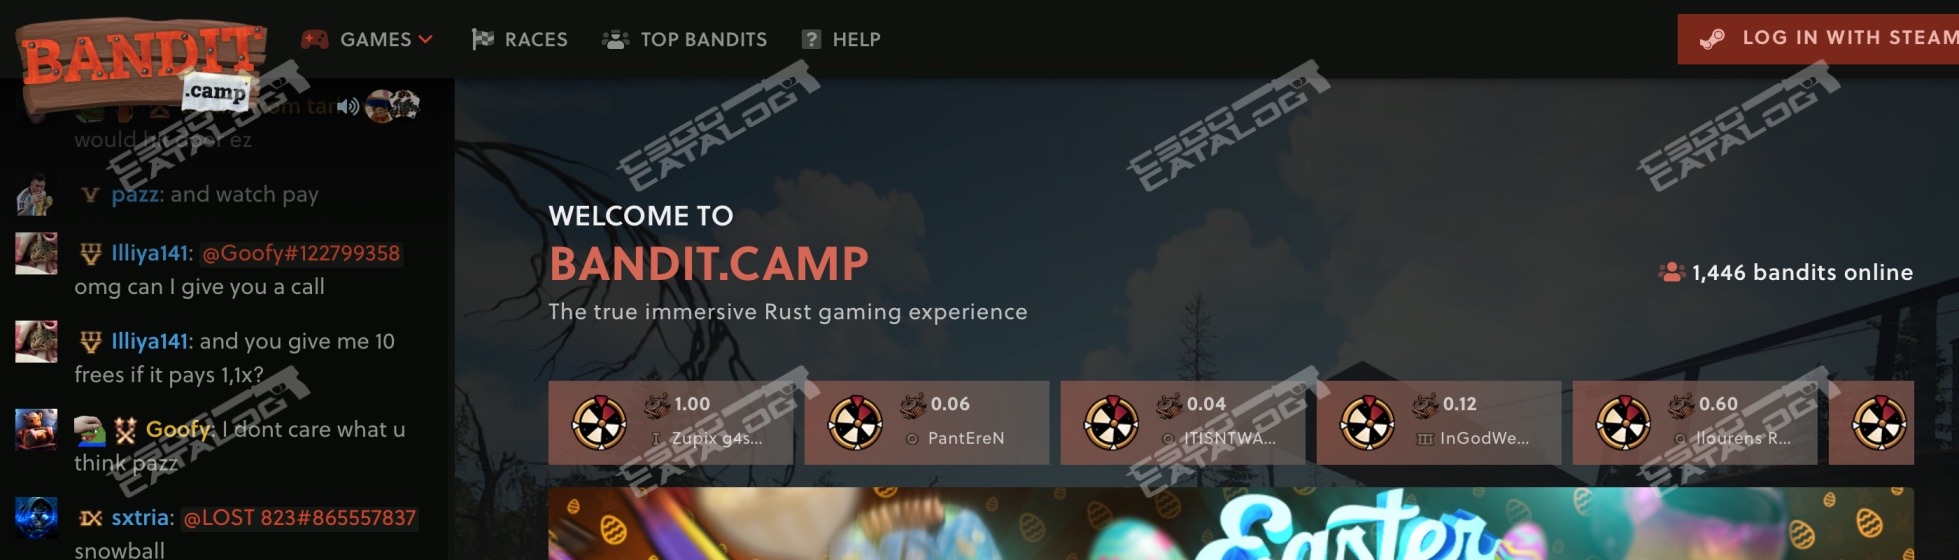 bandit camp promo code